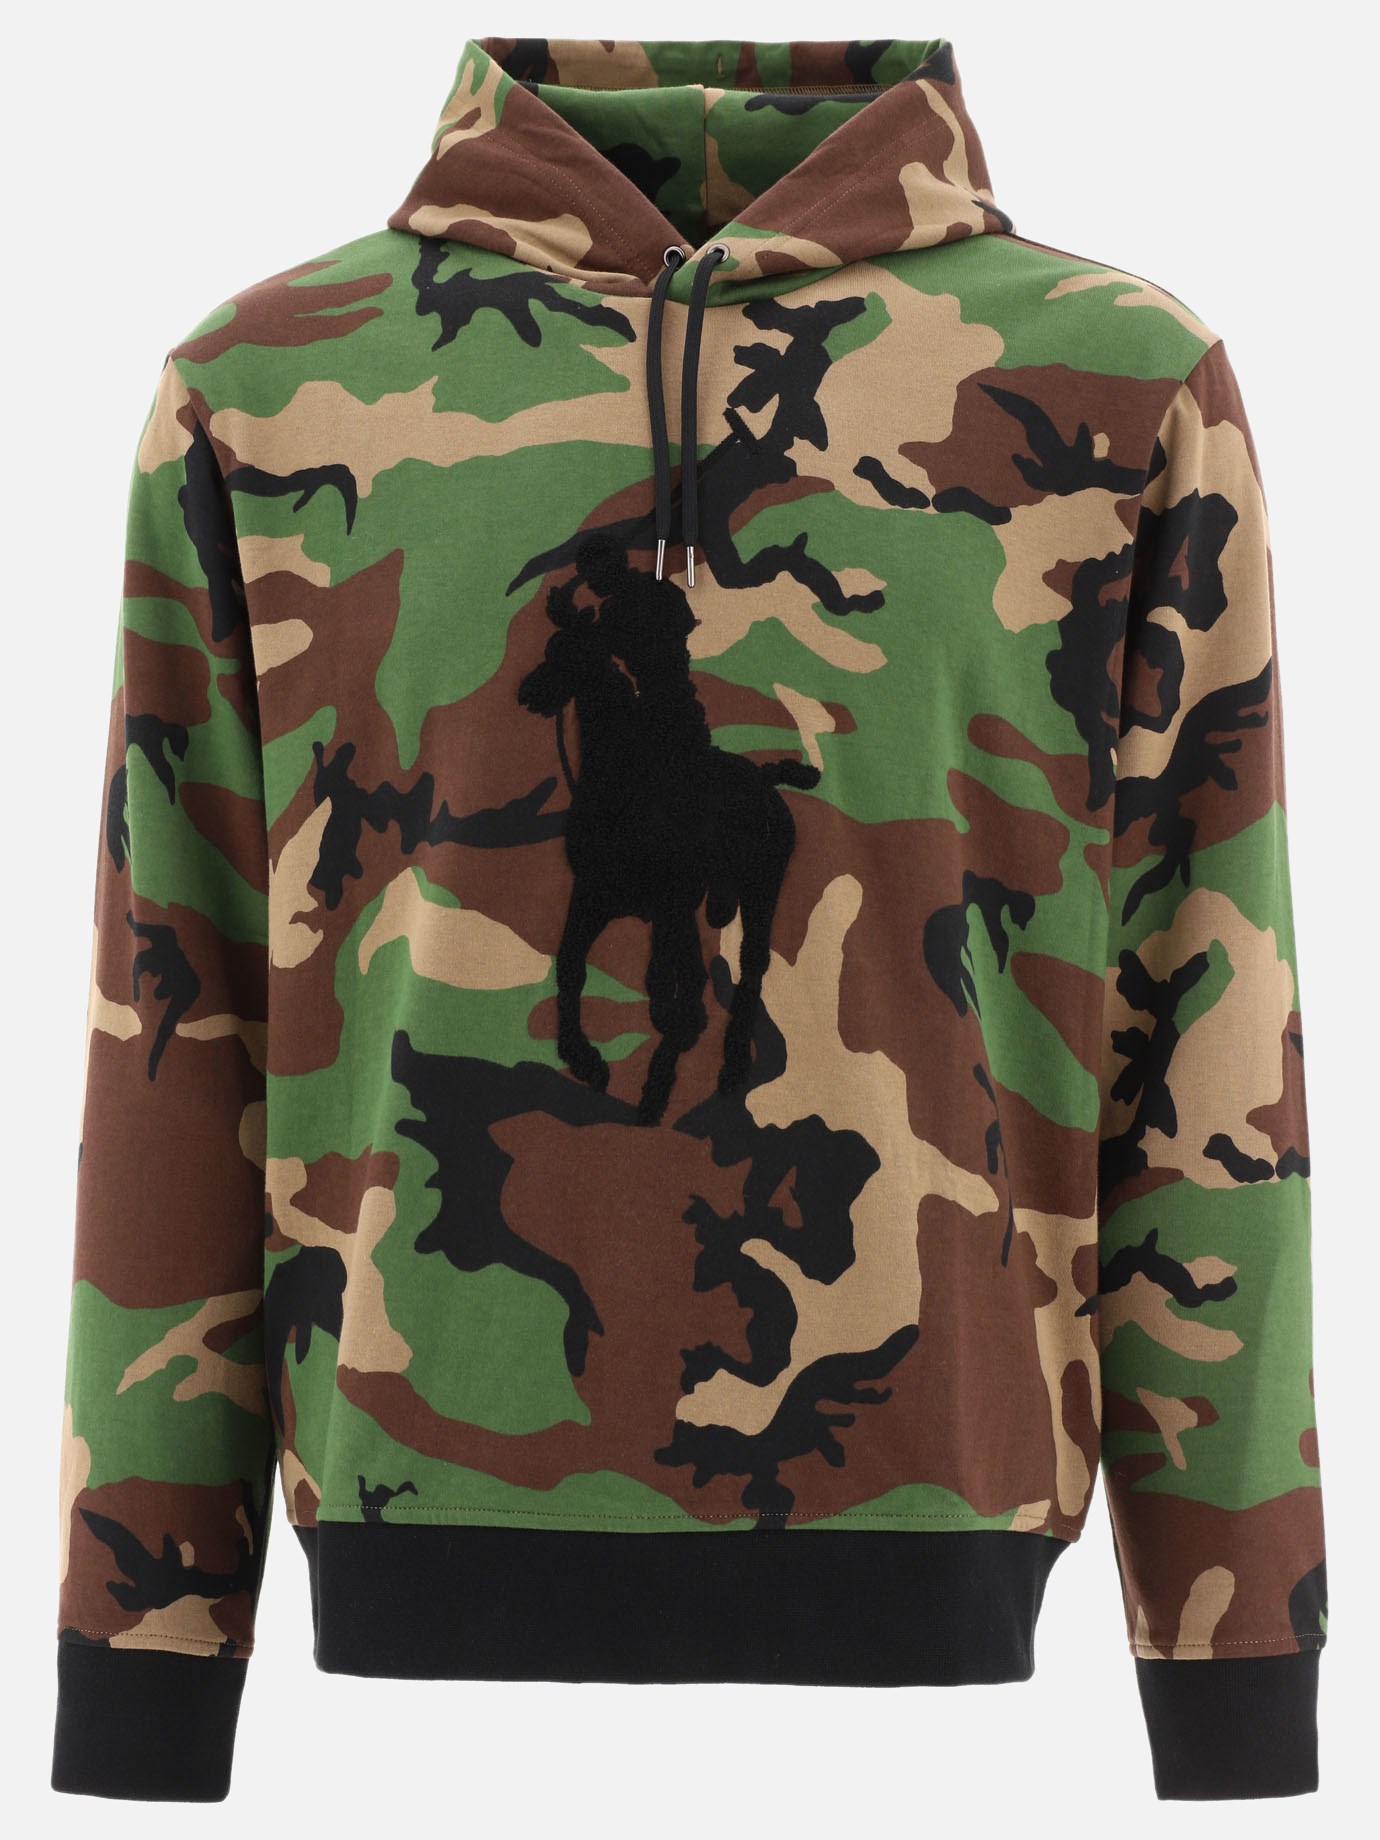  Pony  camouflage hoodieby Polo Ralph Lauren - 1